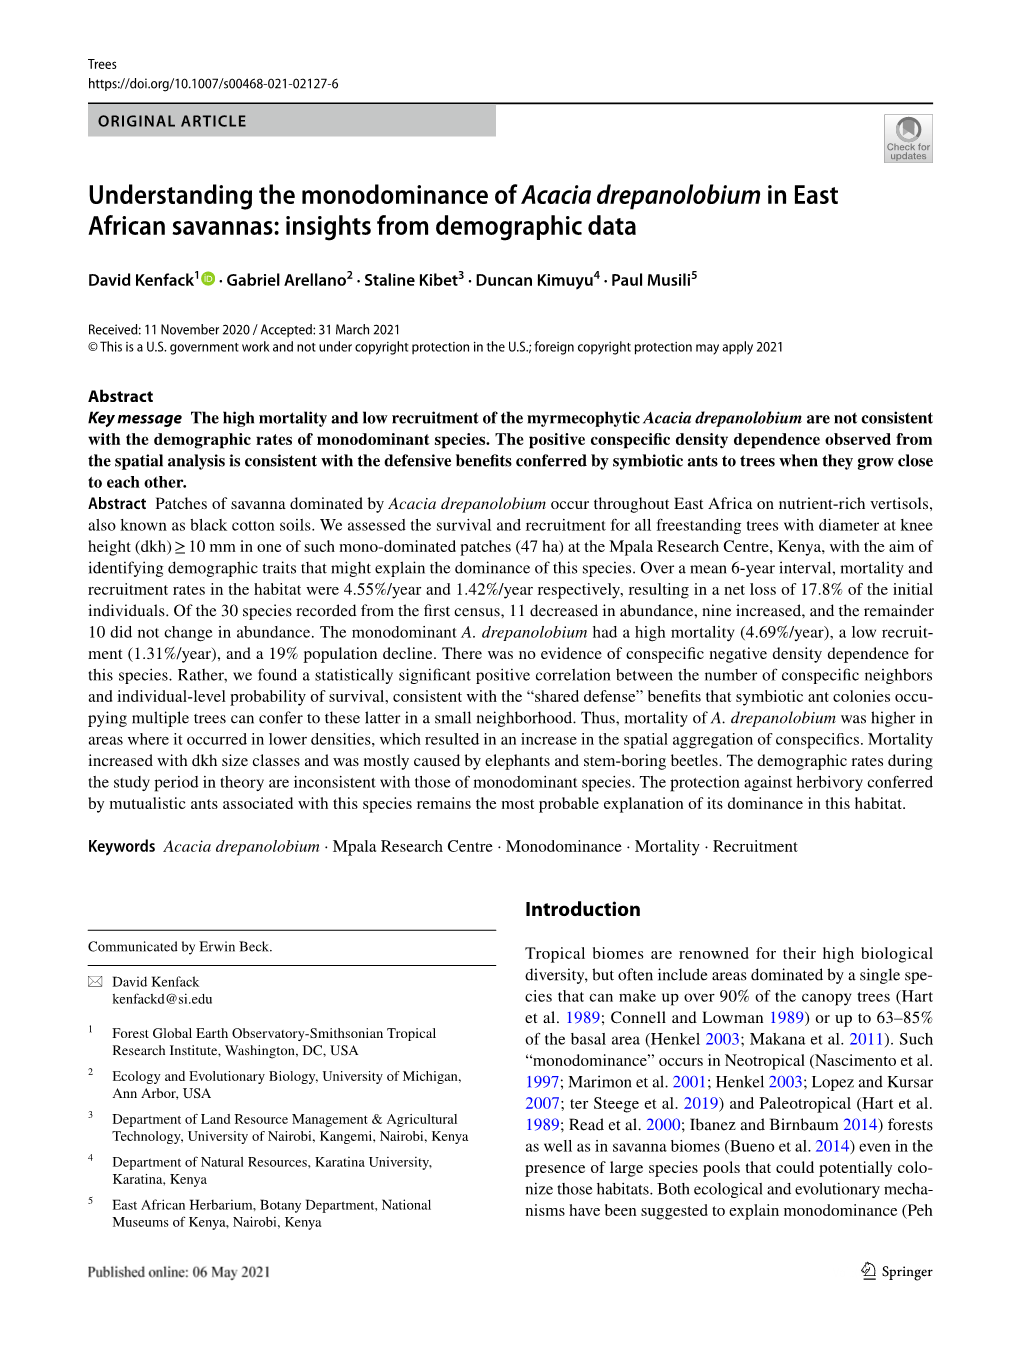 Understanding the Monodominance of Acacia Drepanolobium in East African Savannas: Insights from Demographic Data